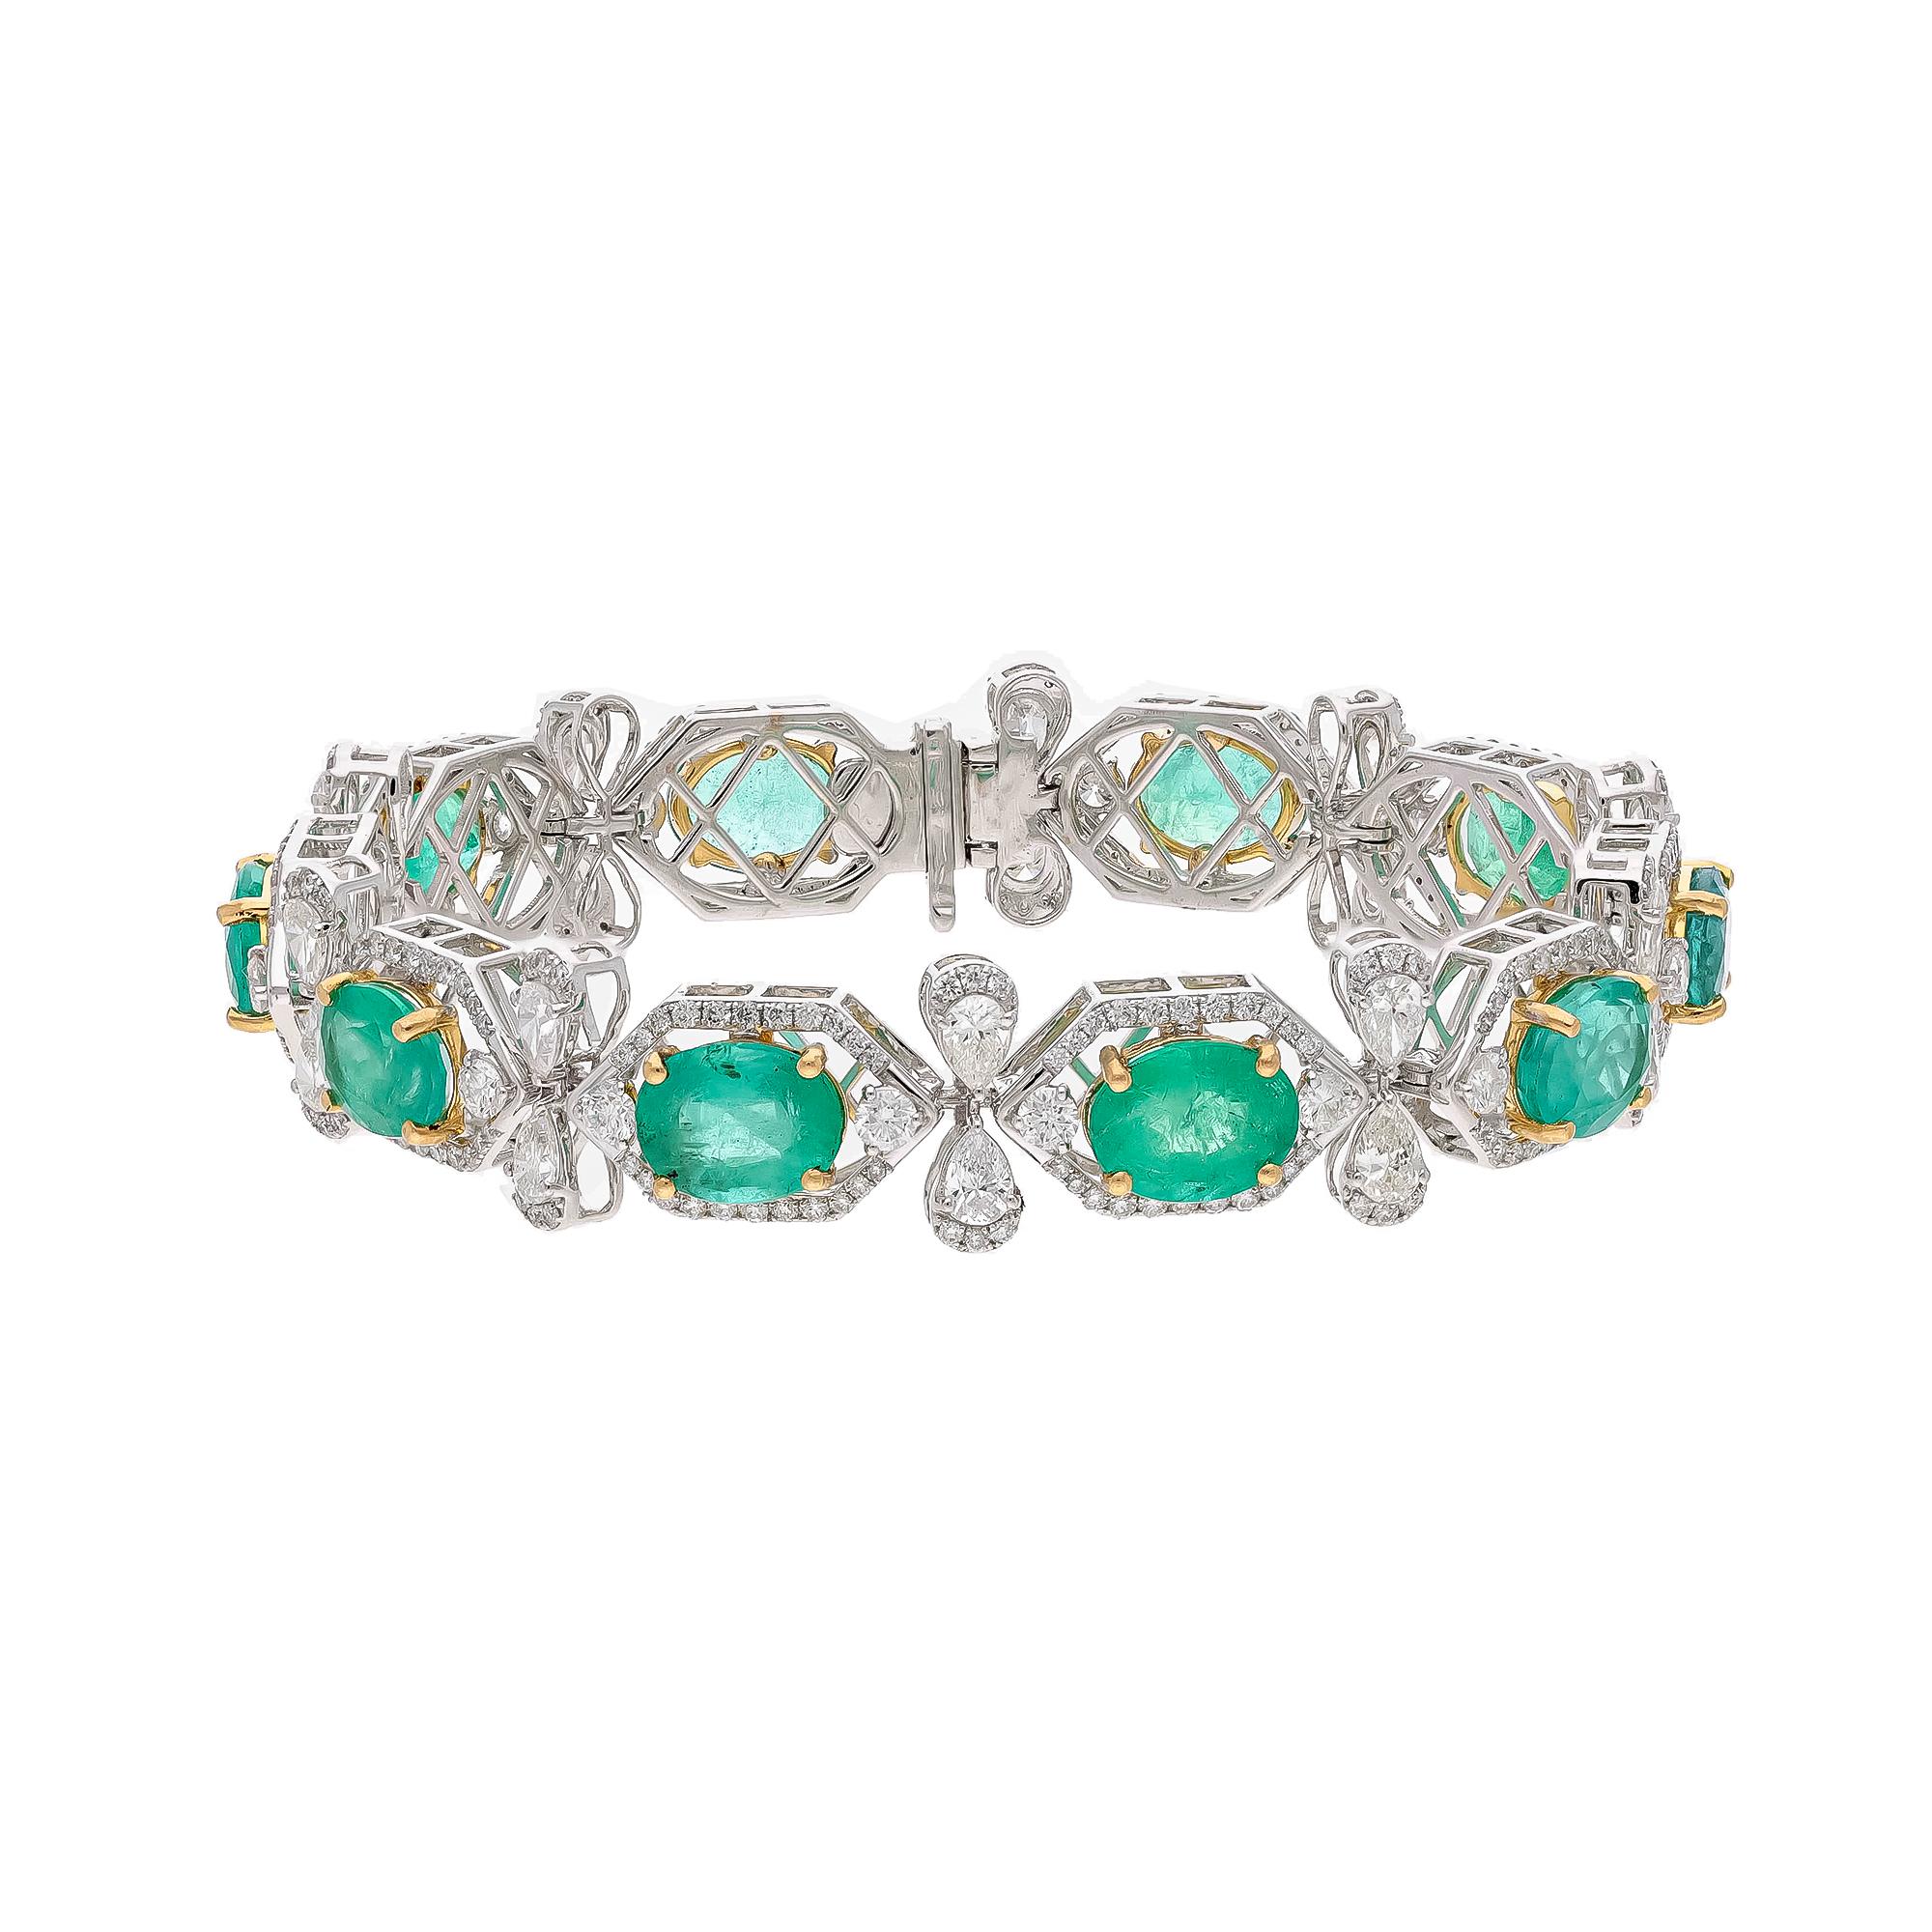 Mixed Cut Natural Zambian Emerald Bracelet with Diamond and 18k Gold